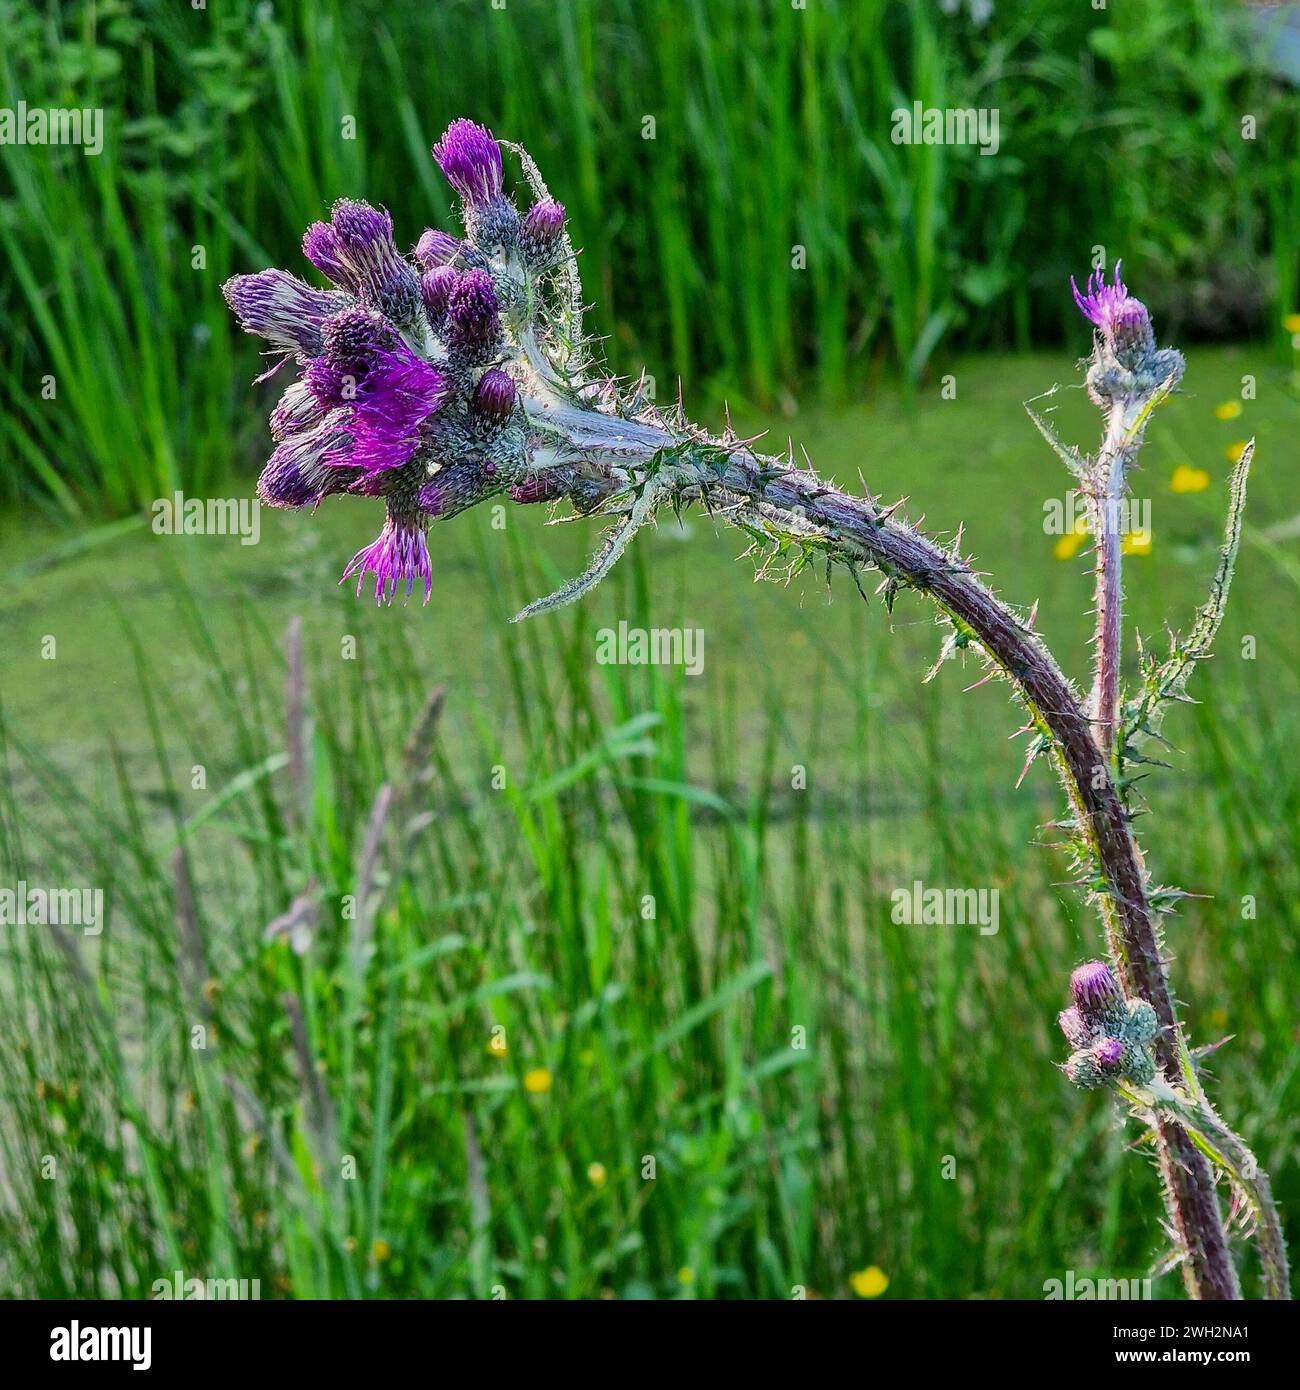 Boccioli e fiori di cardo palustre o cardo palustre europeo (circium palustre) Foto Stock